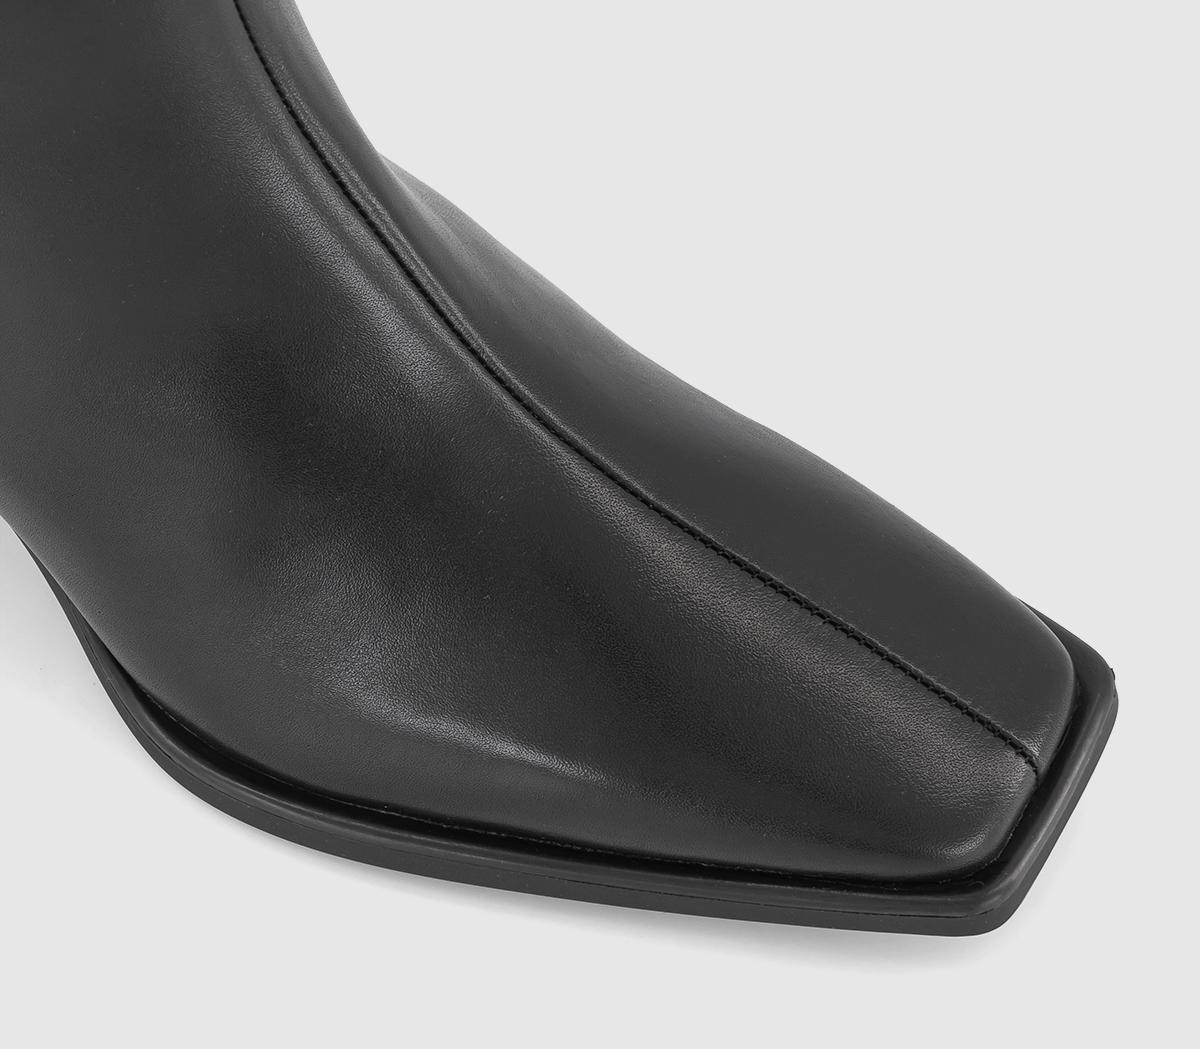 Vagabond Shoemakers Hedda Boots Black - Women's Ankle Boots